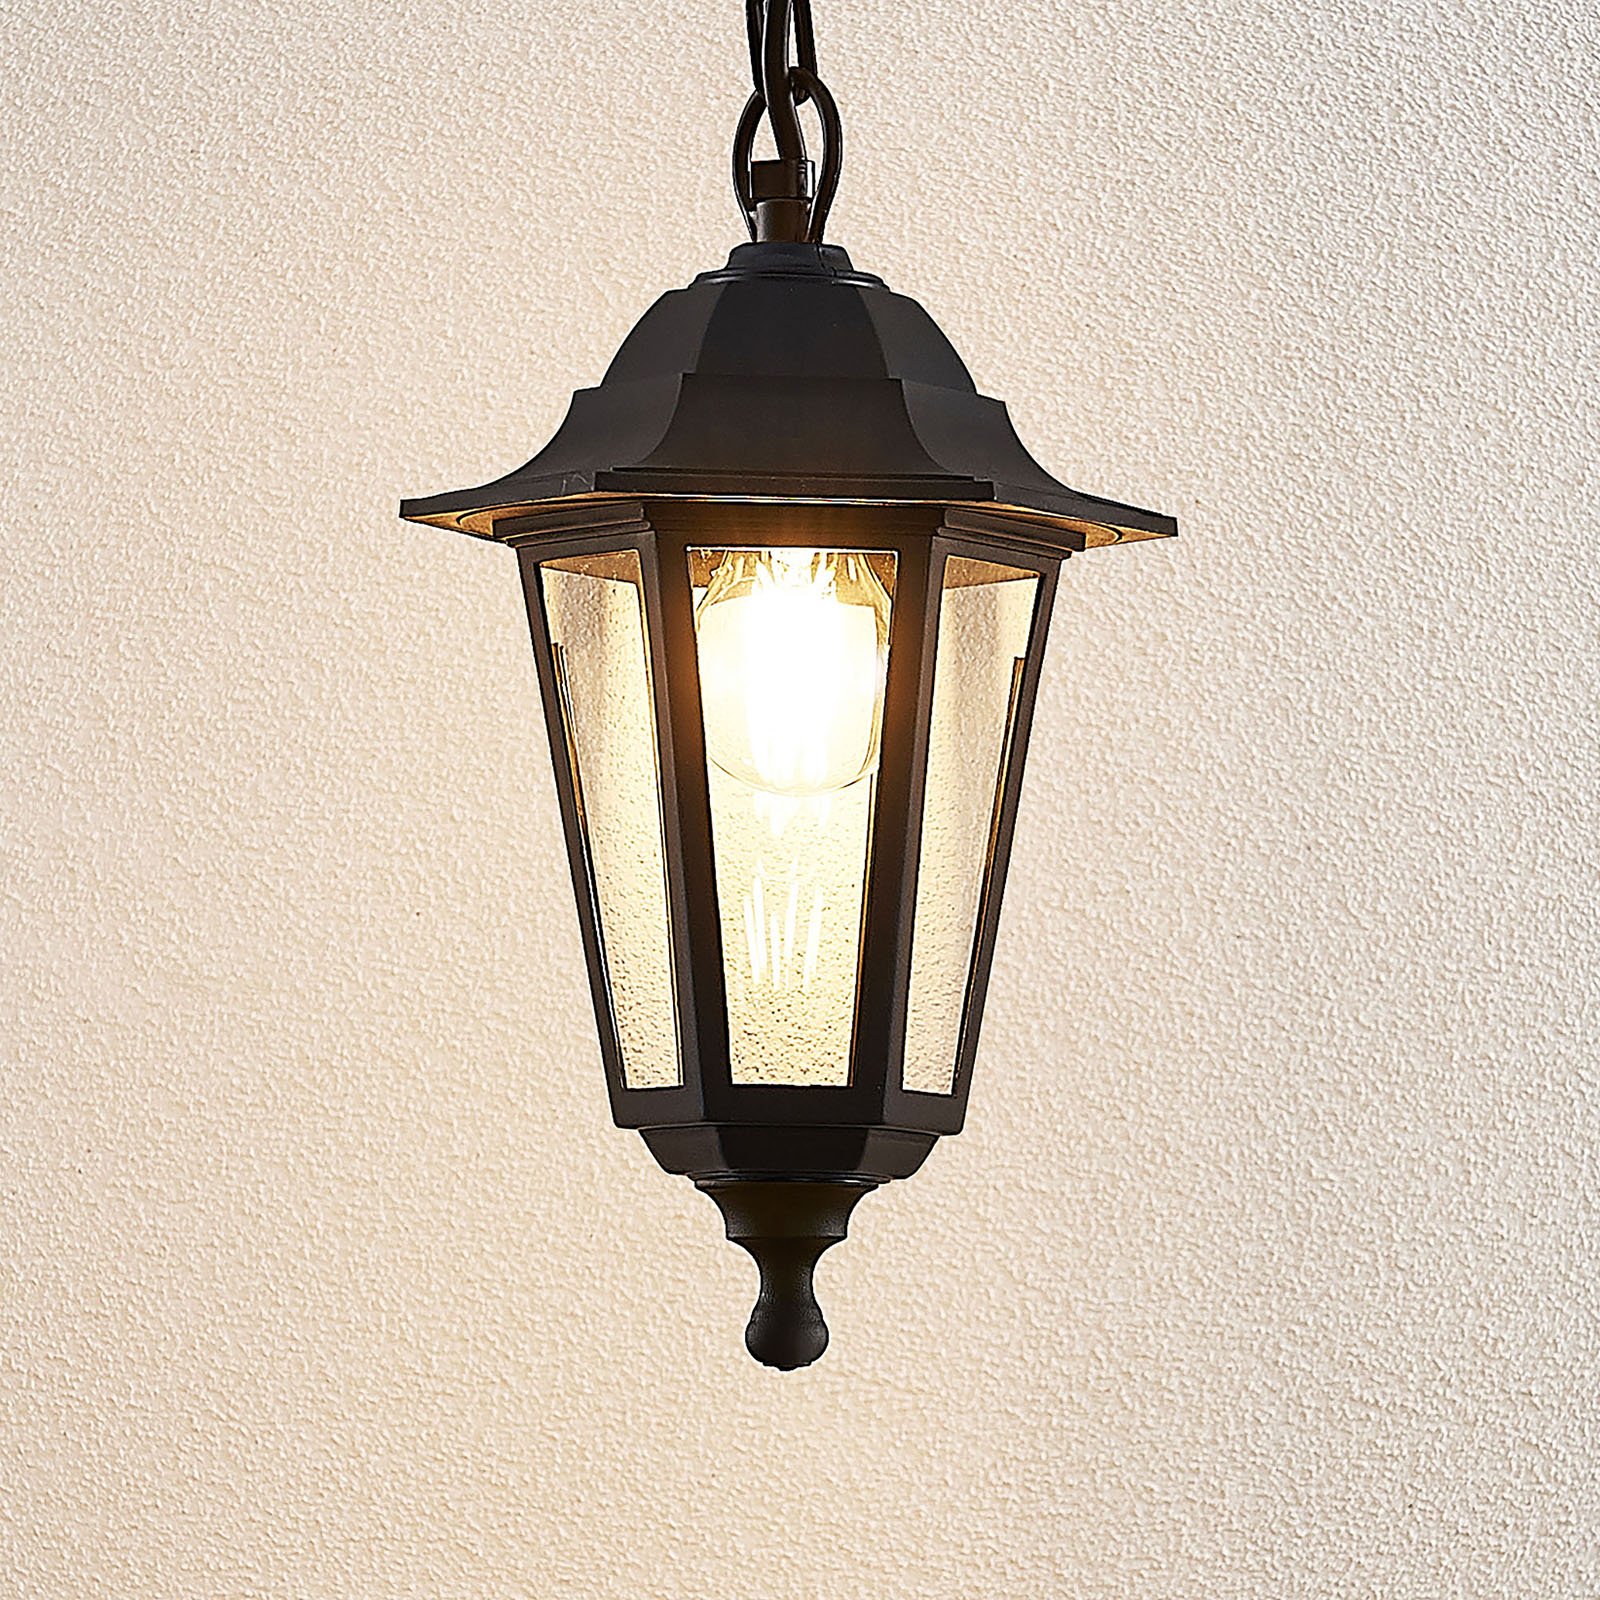 Nane outdoor hanging light in a lantern shape